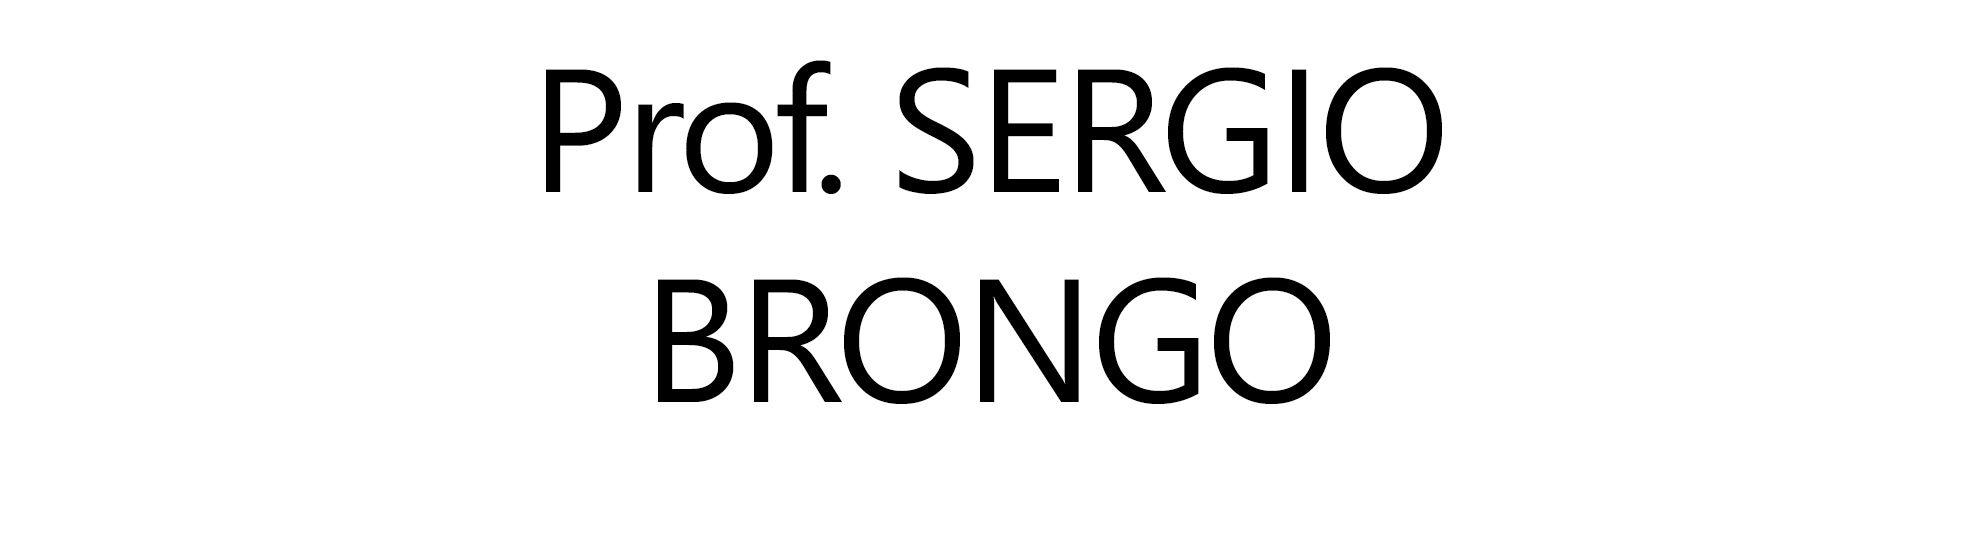 Prof. Sergio Brongo